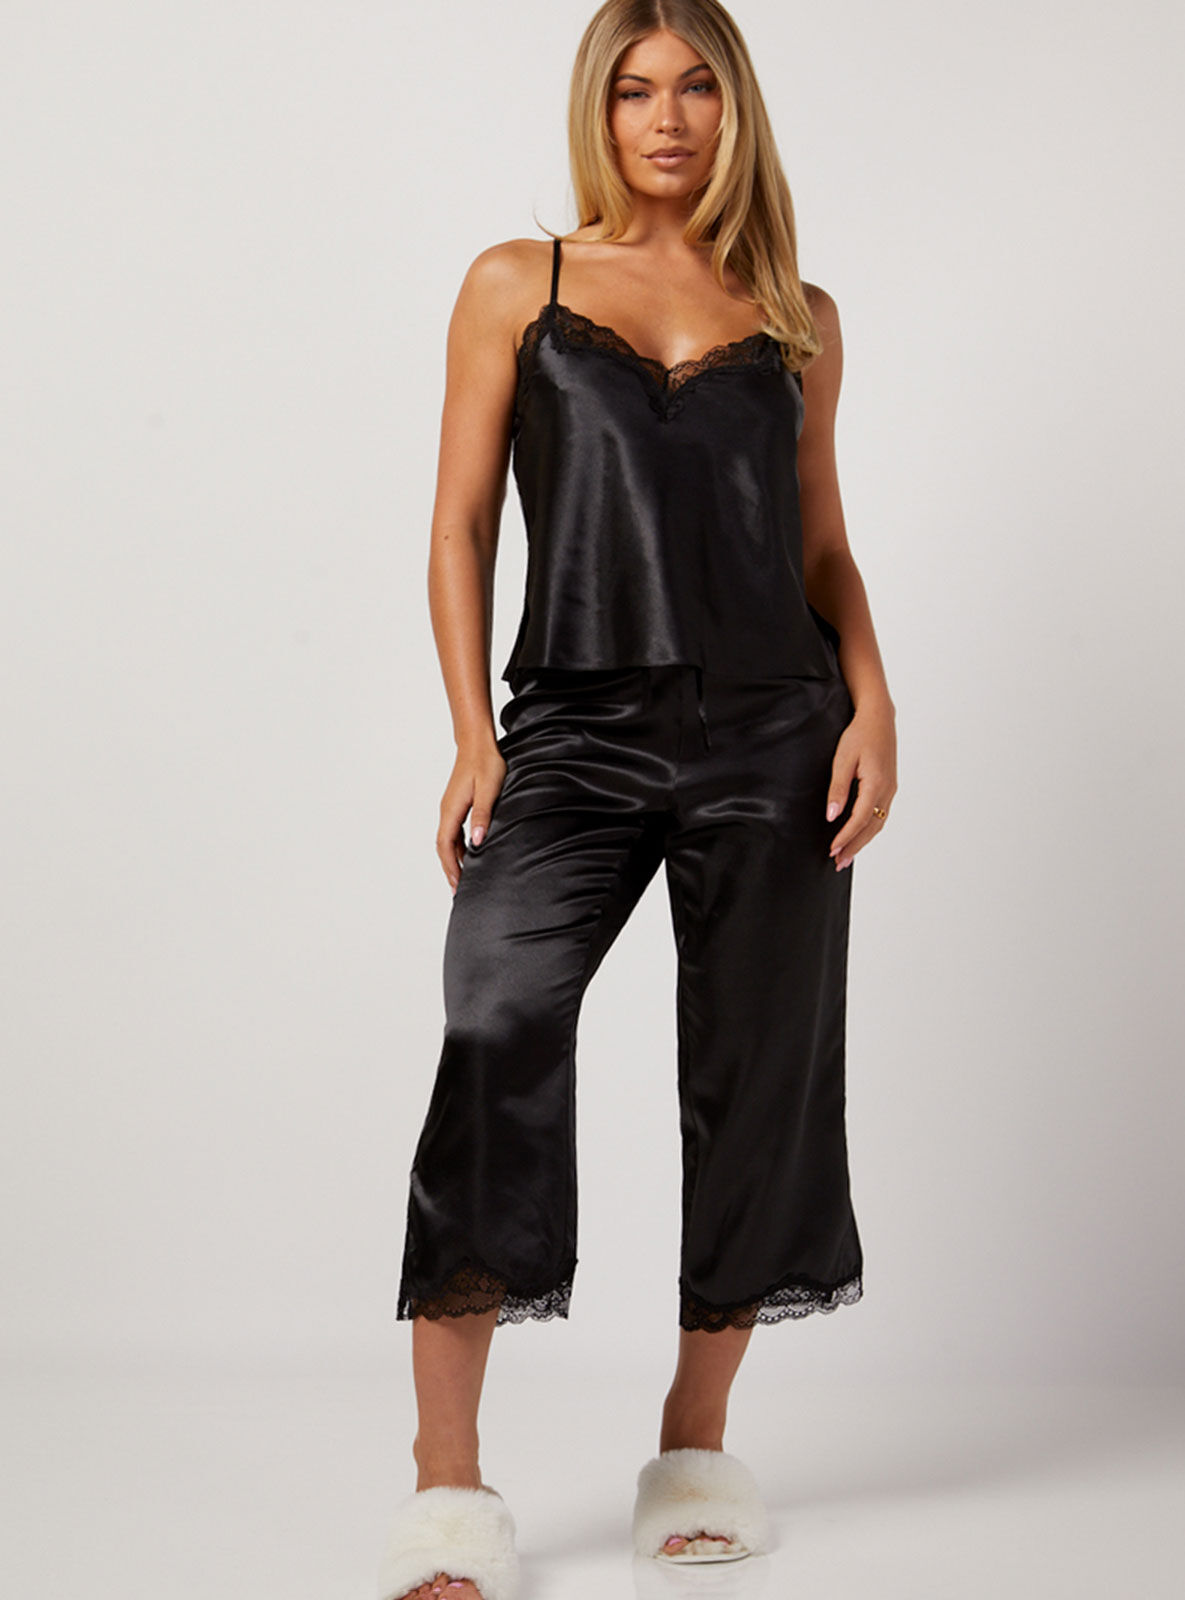 Boux Avenue Maisie satin cami and cropped pant set - Black - 10